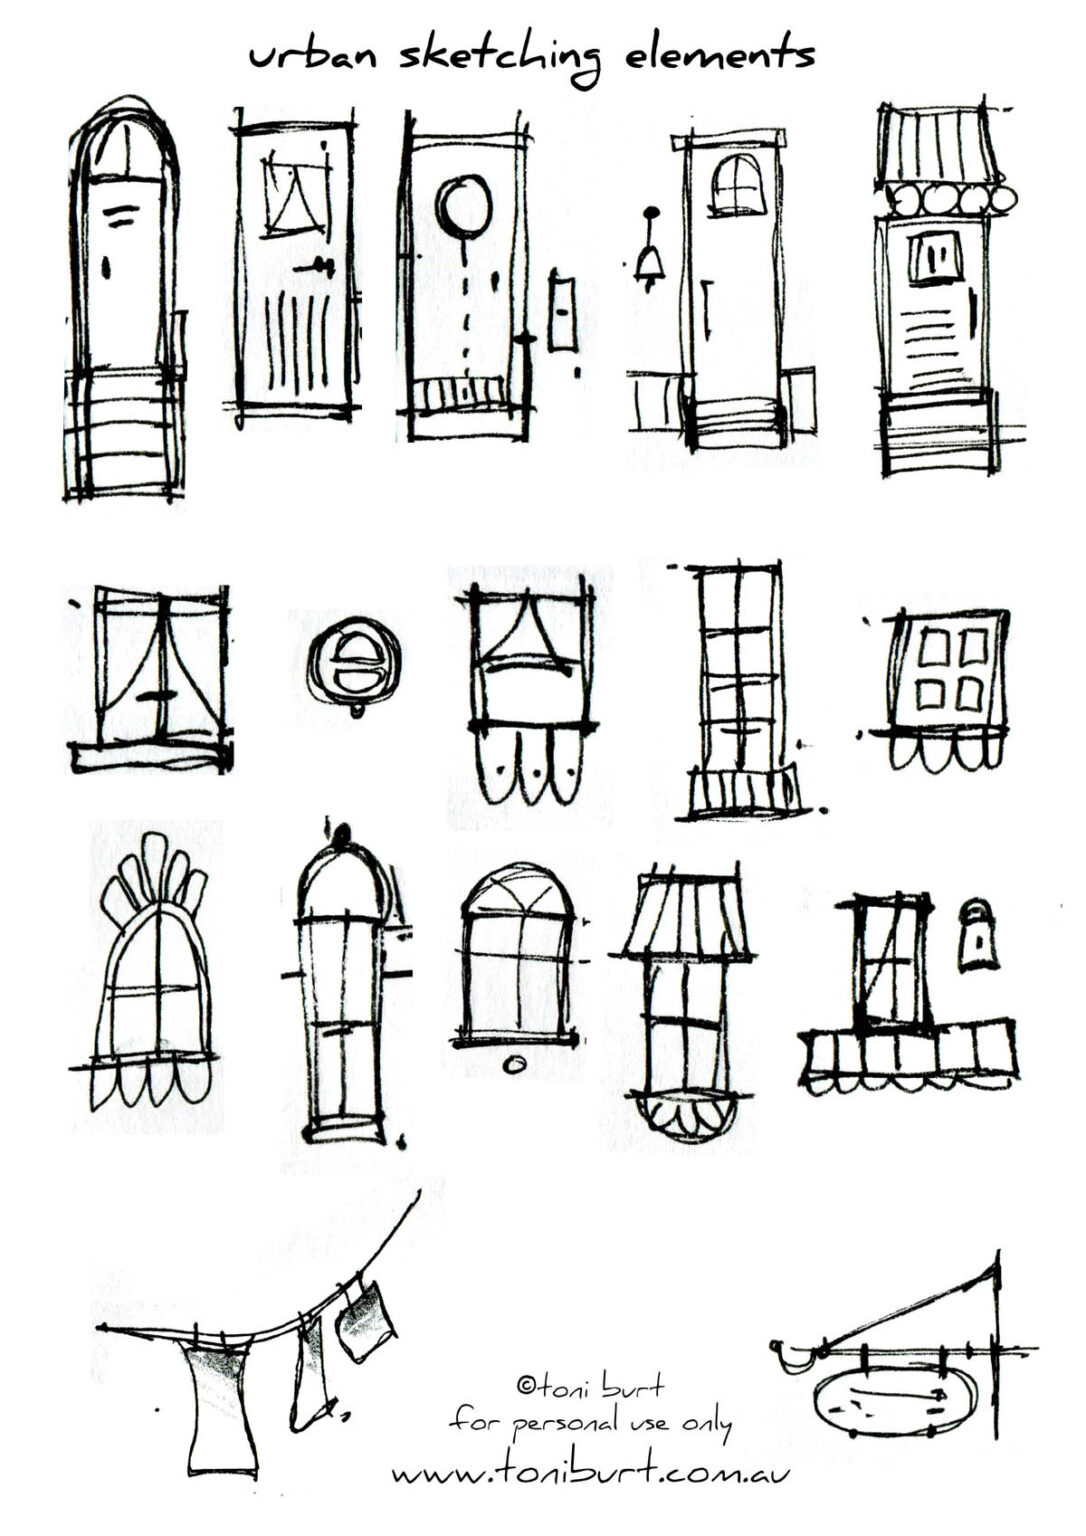 Toni Burt Urban Sketching Elements Sketchbook Revival Library 3 3 1086x1536 